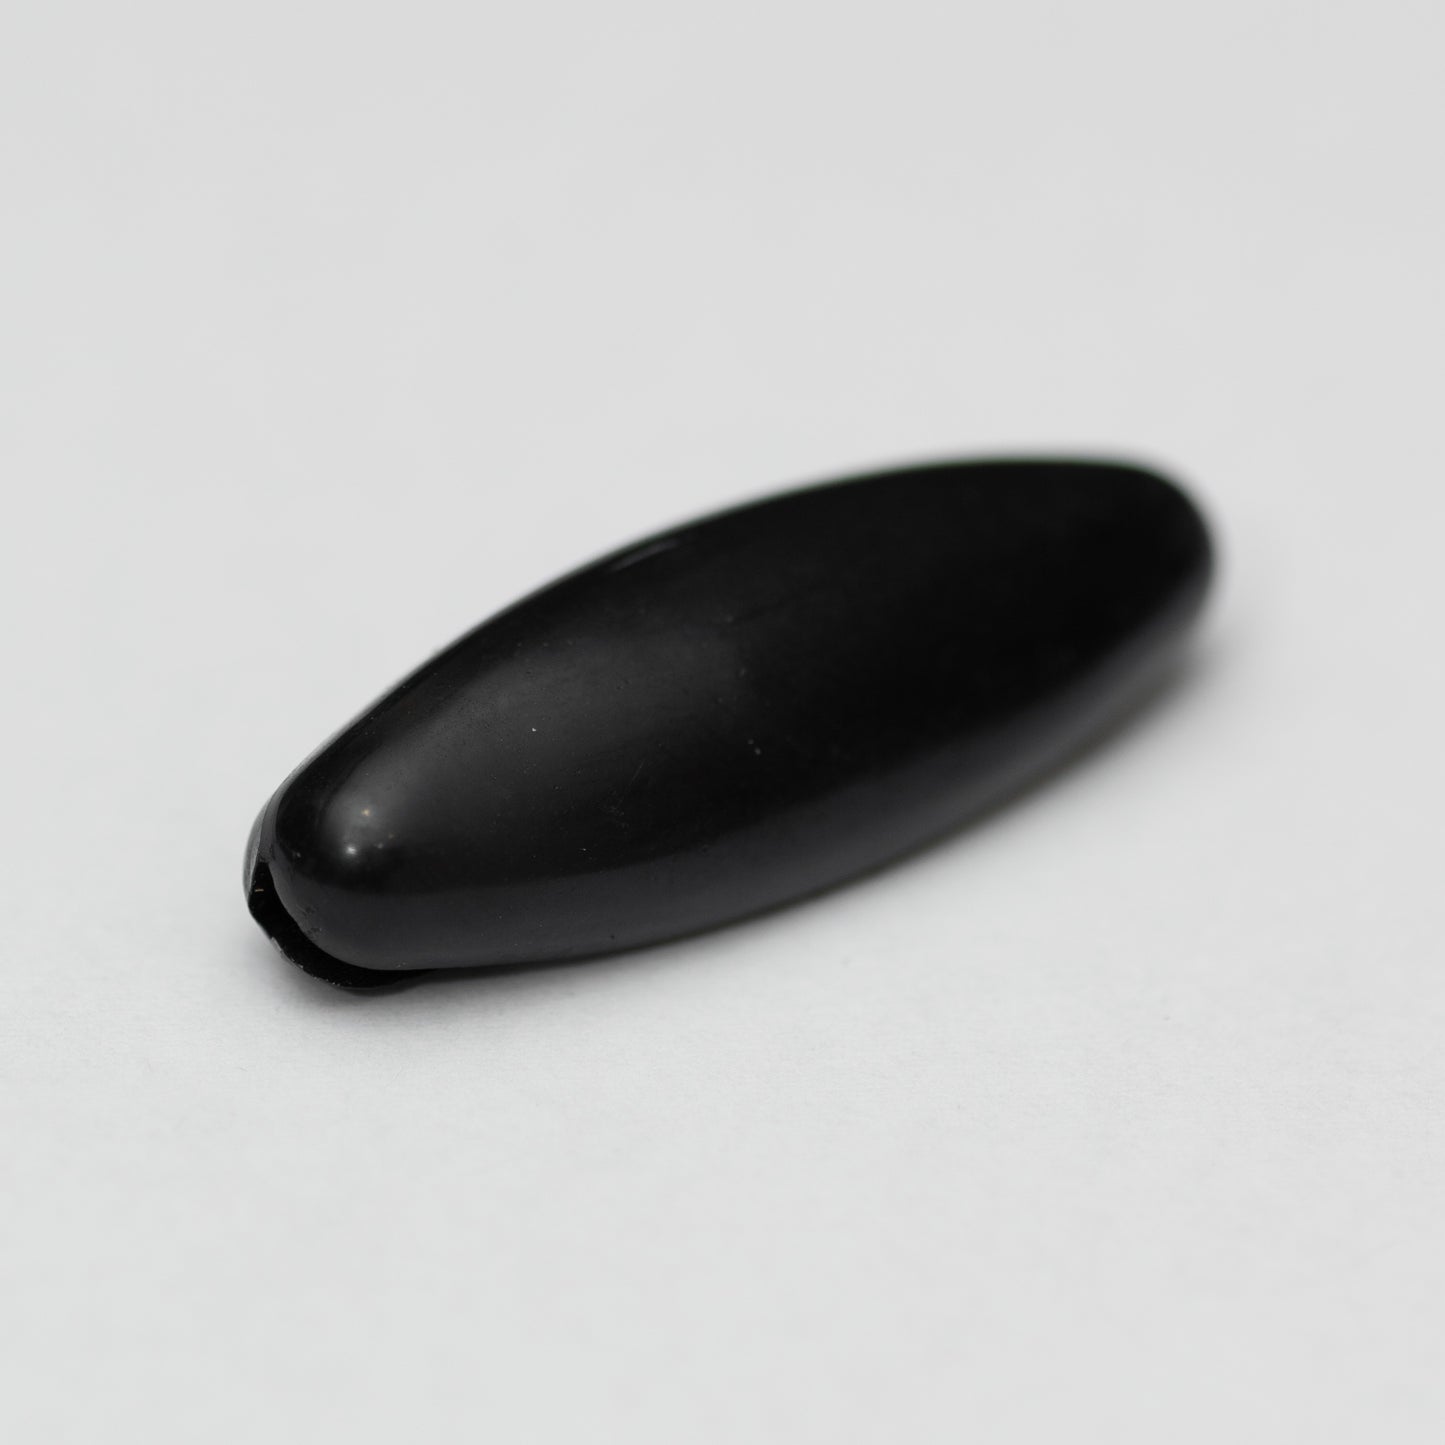 Scarf Pin in Black